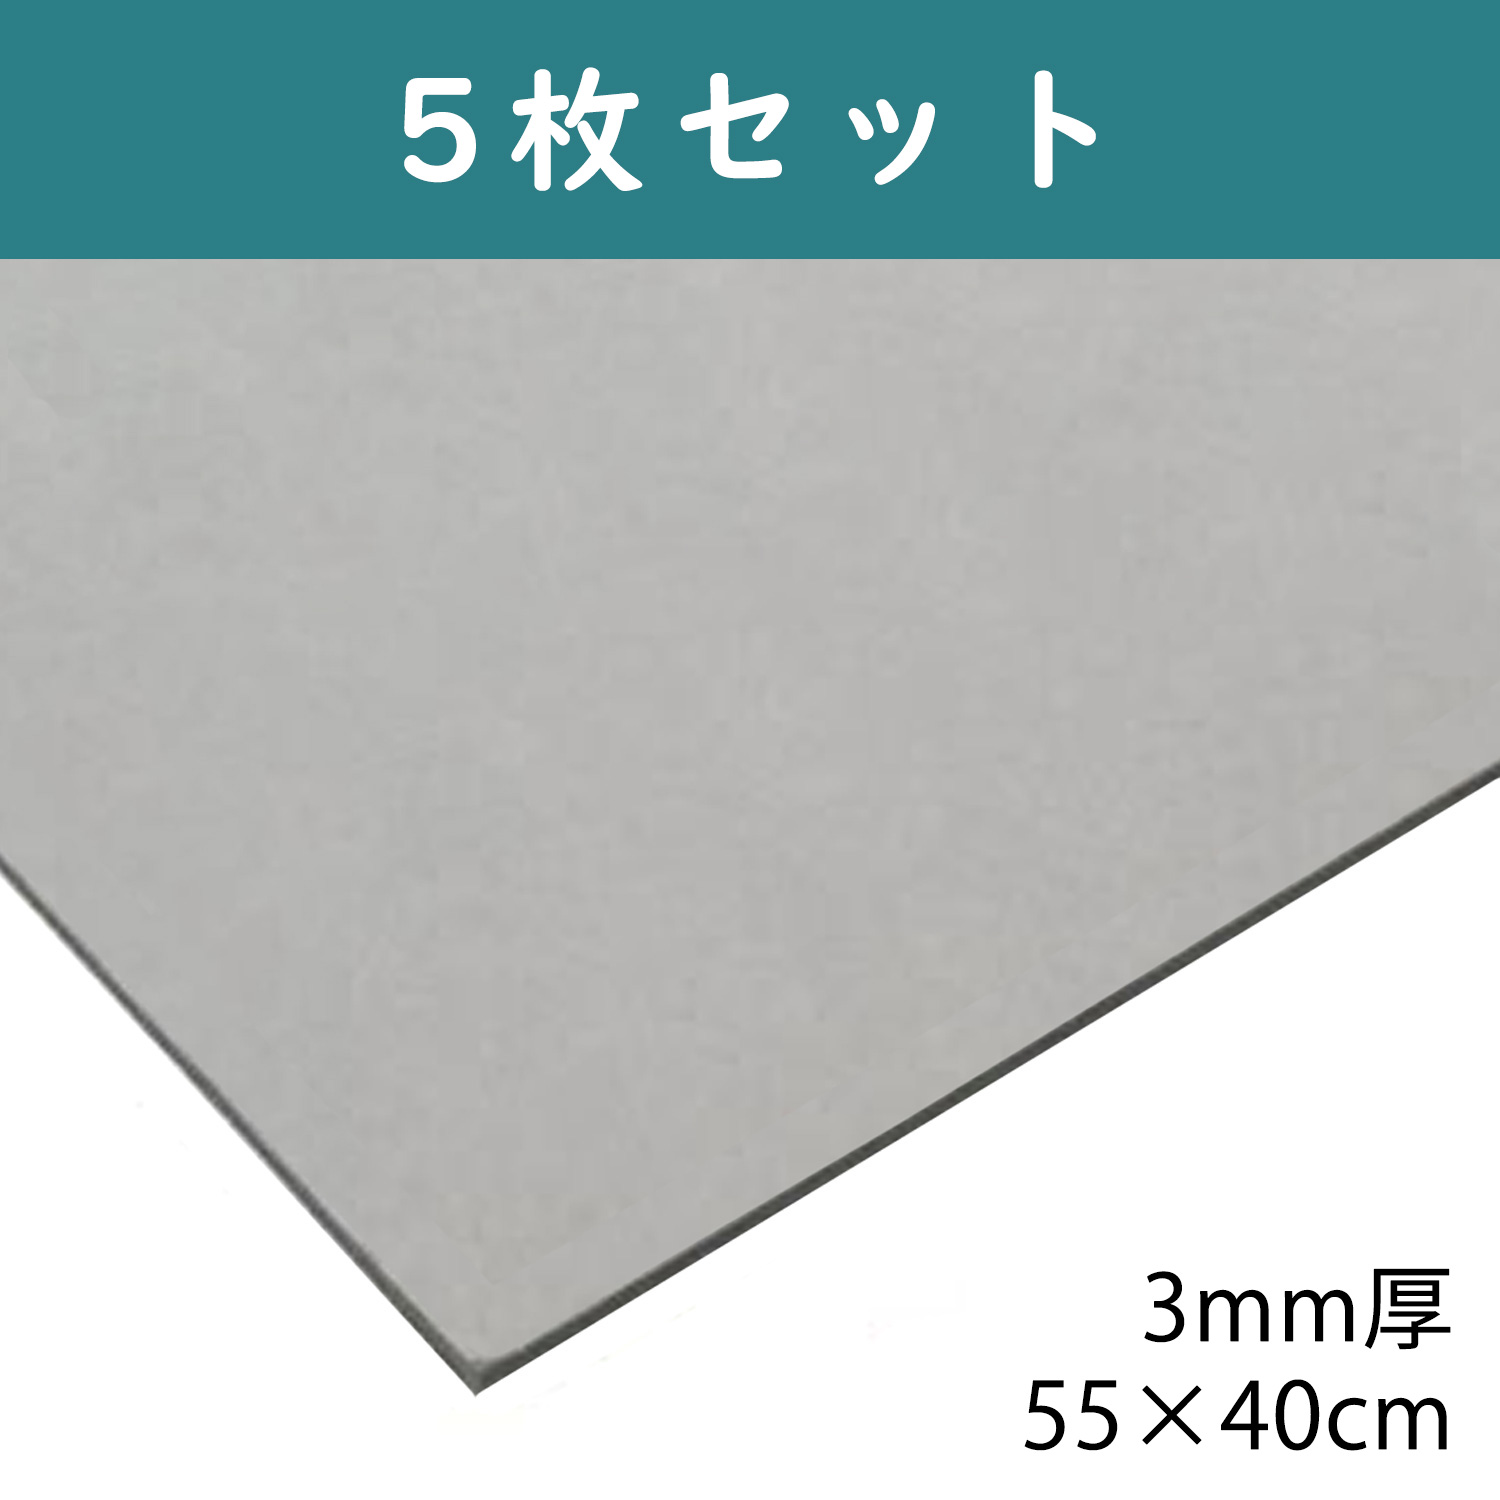 CTN18 グレー厚紙 3mm 55cm×40cm 5枚入 (袋)